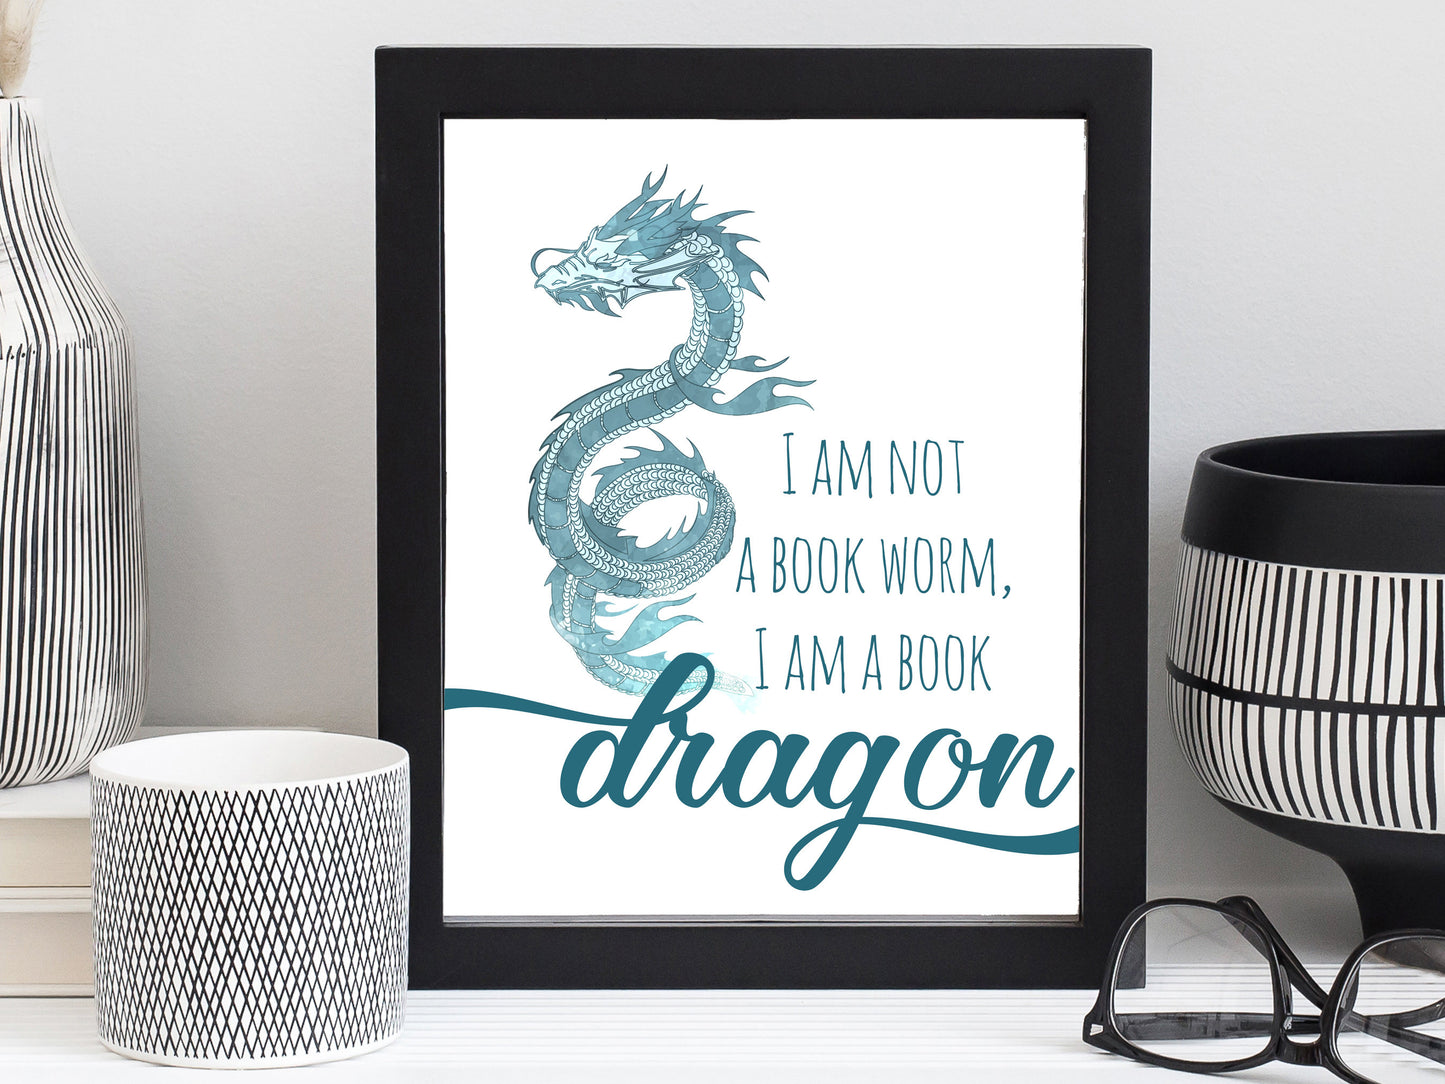 Book Dragon Art Print